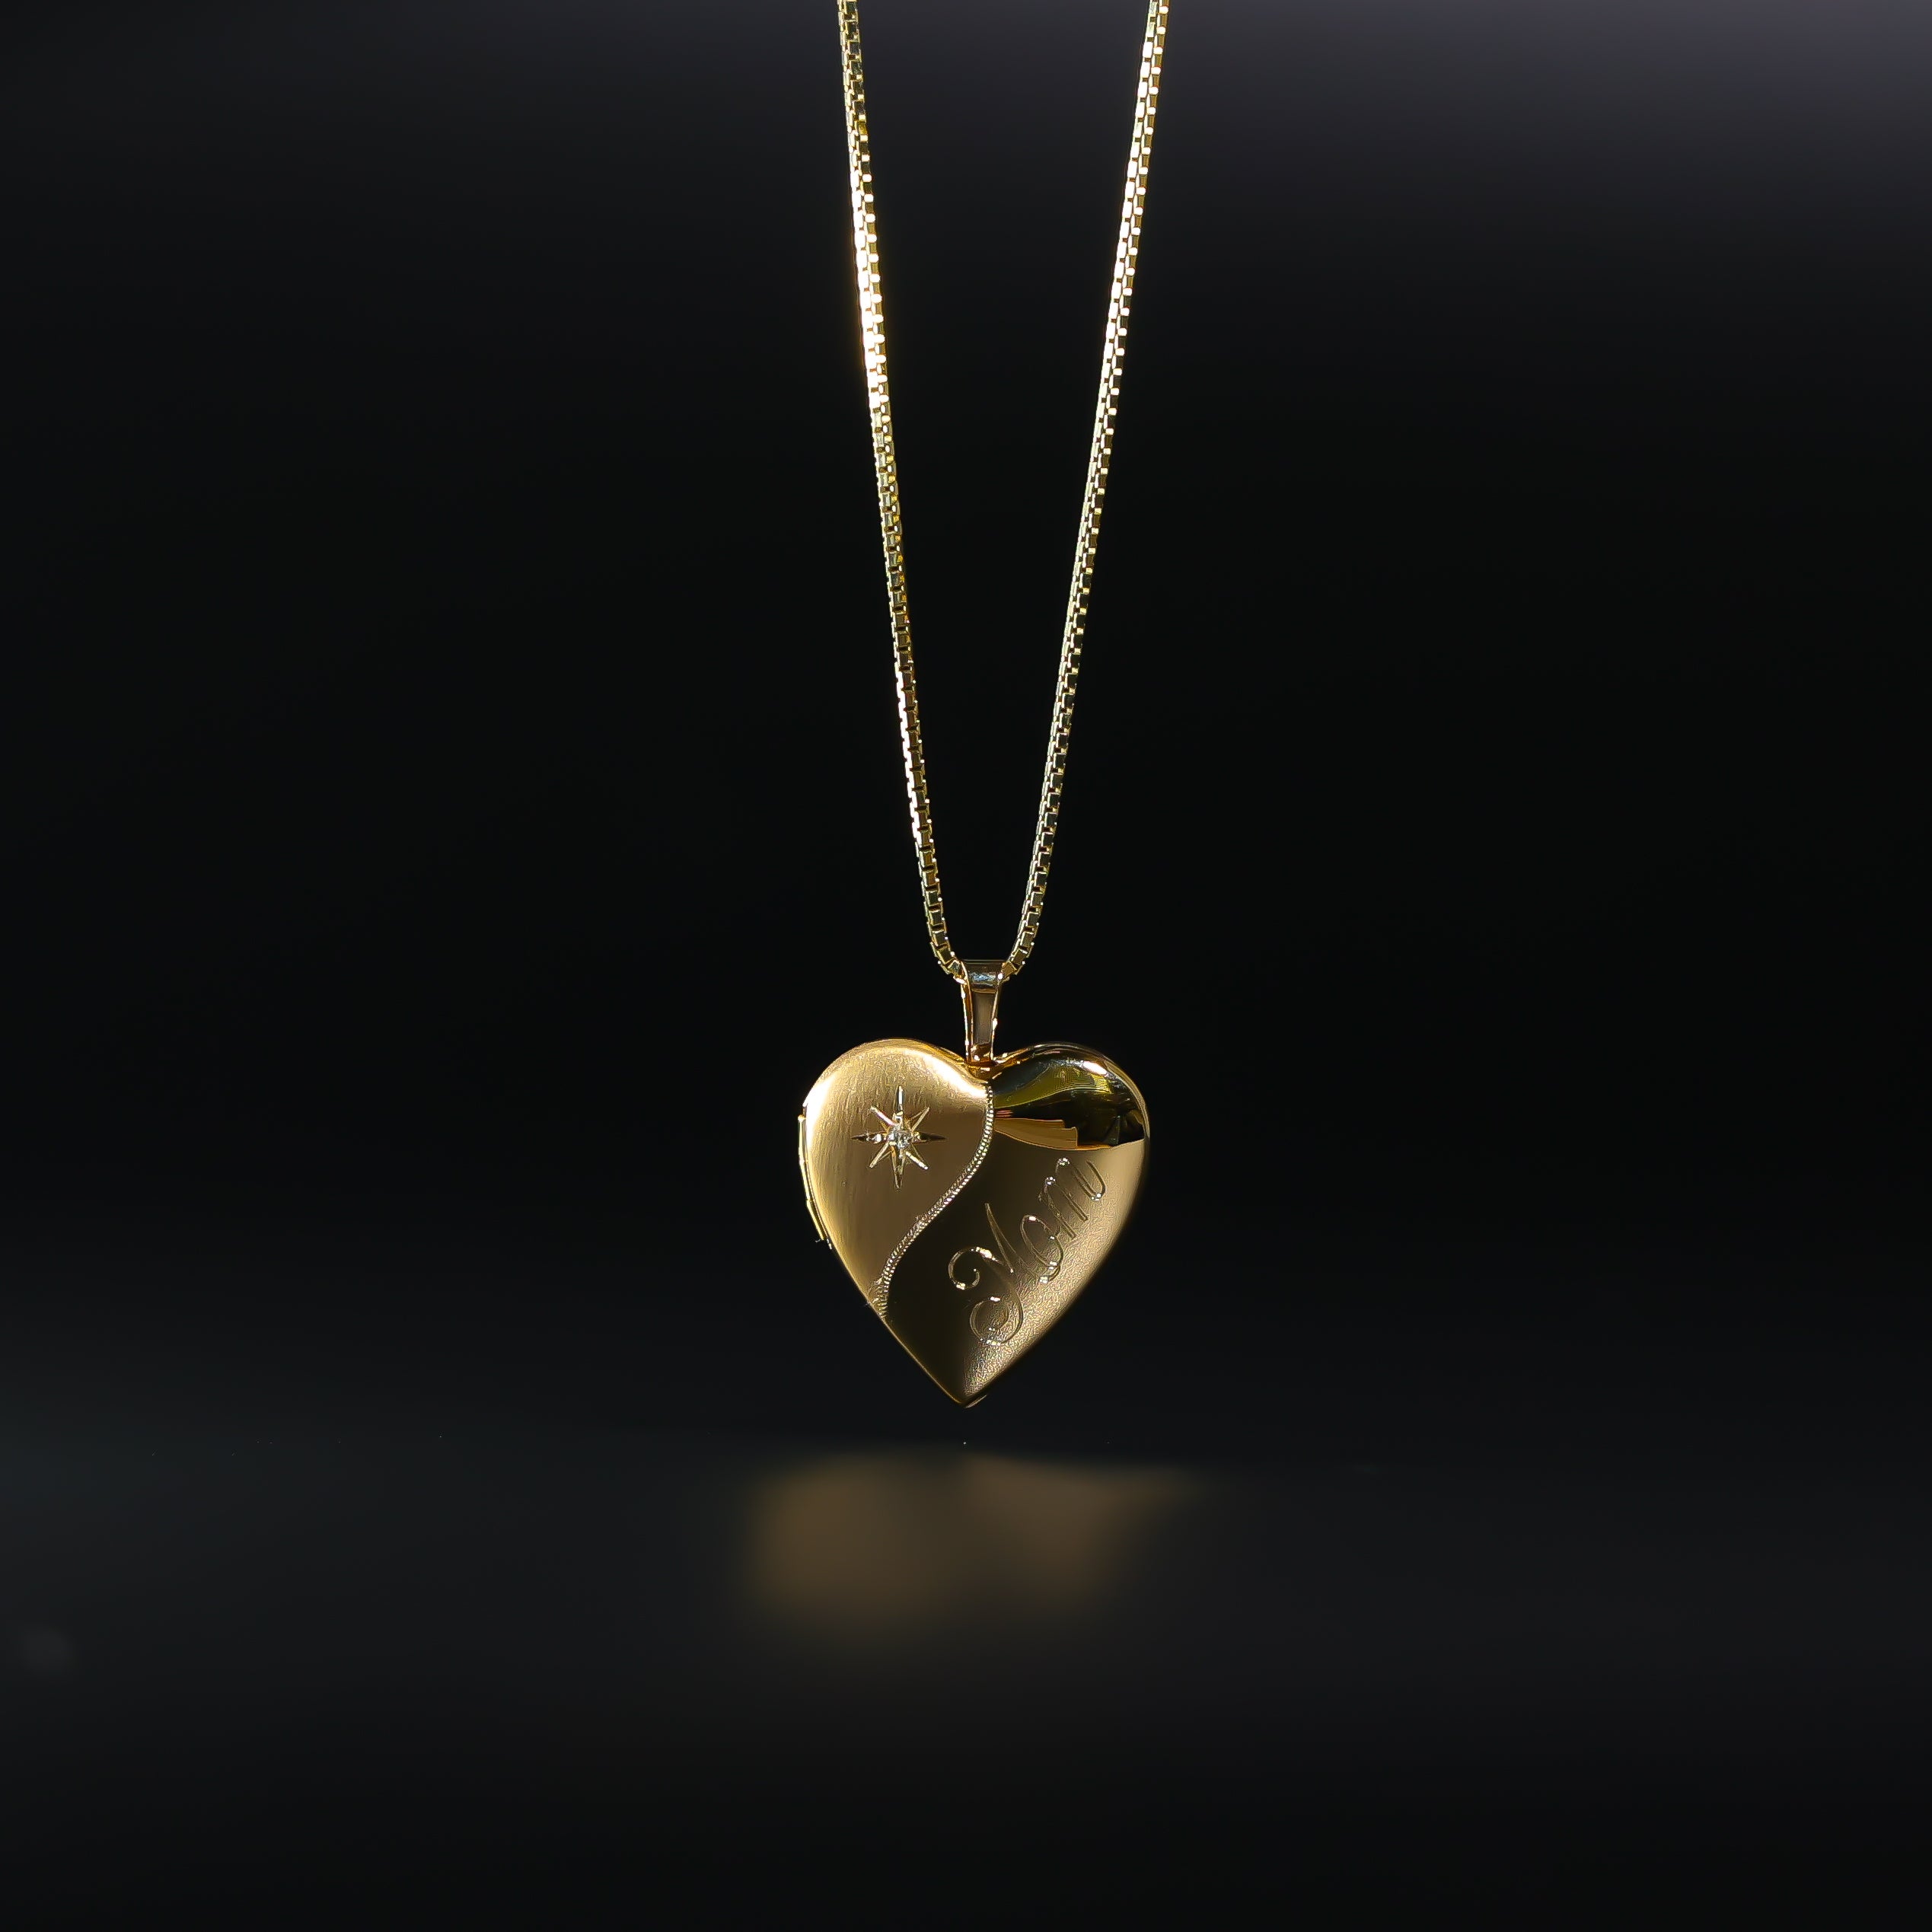 Gold Heart Locket Pendant Model-2028 - Charlie & Co. Jewelry